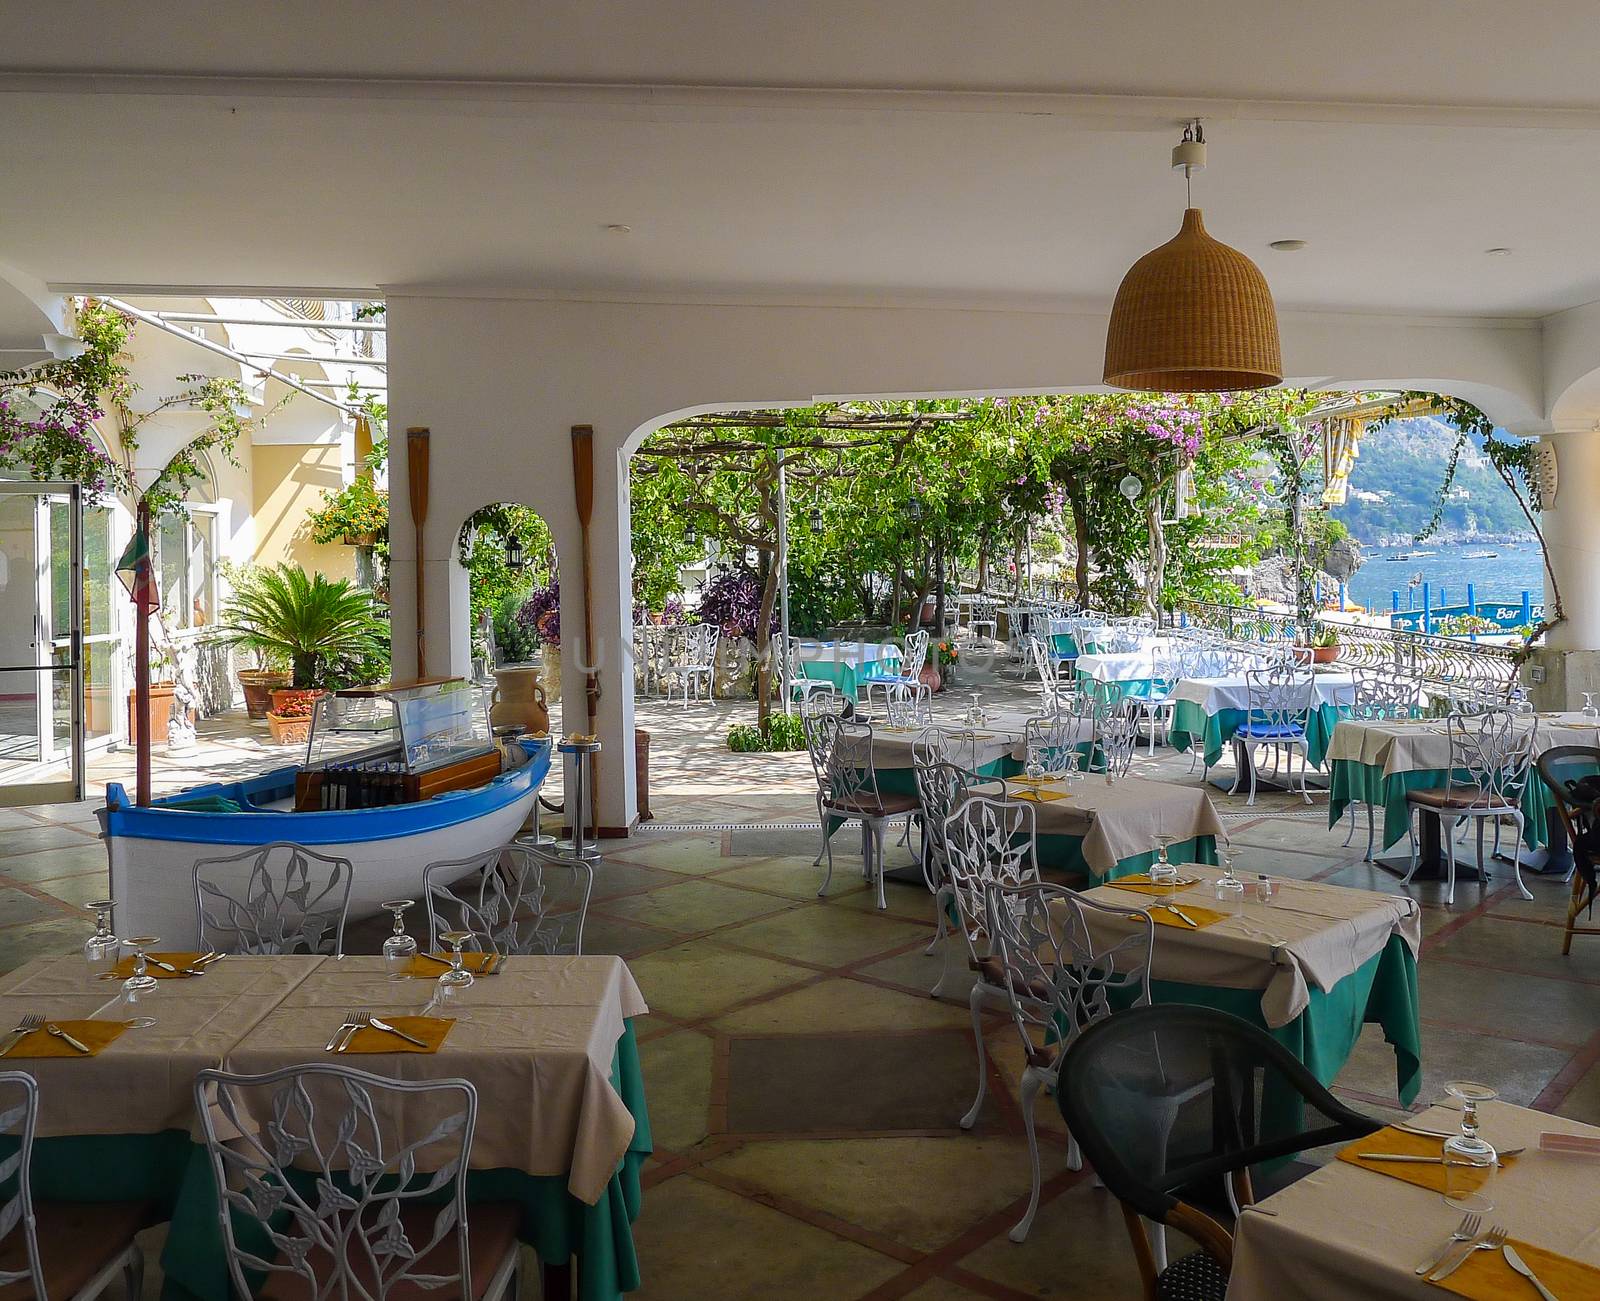 Restaurant on the Amalfi Coast by chrisukphoto